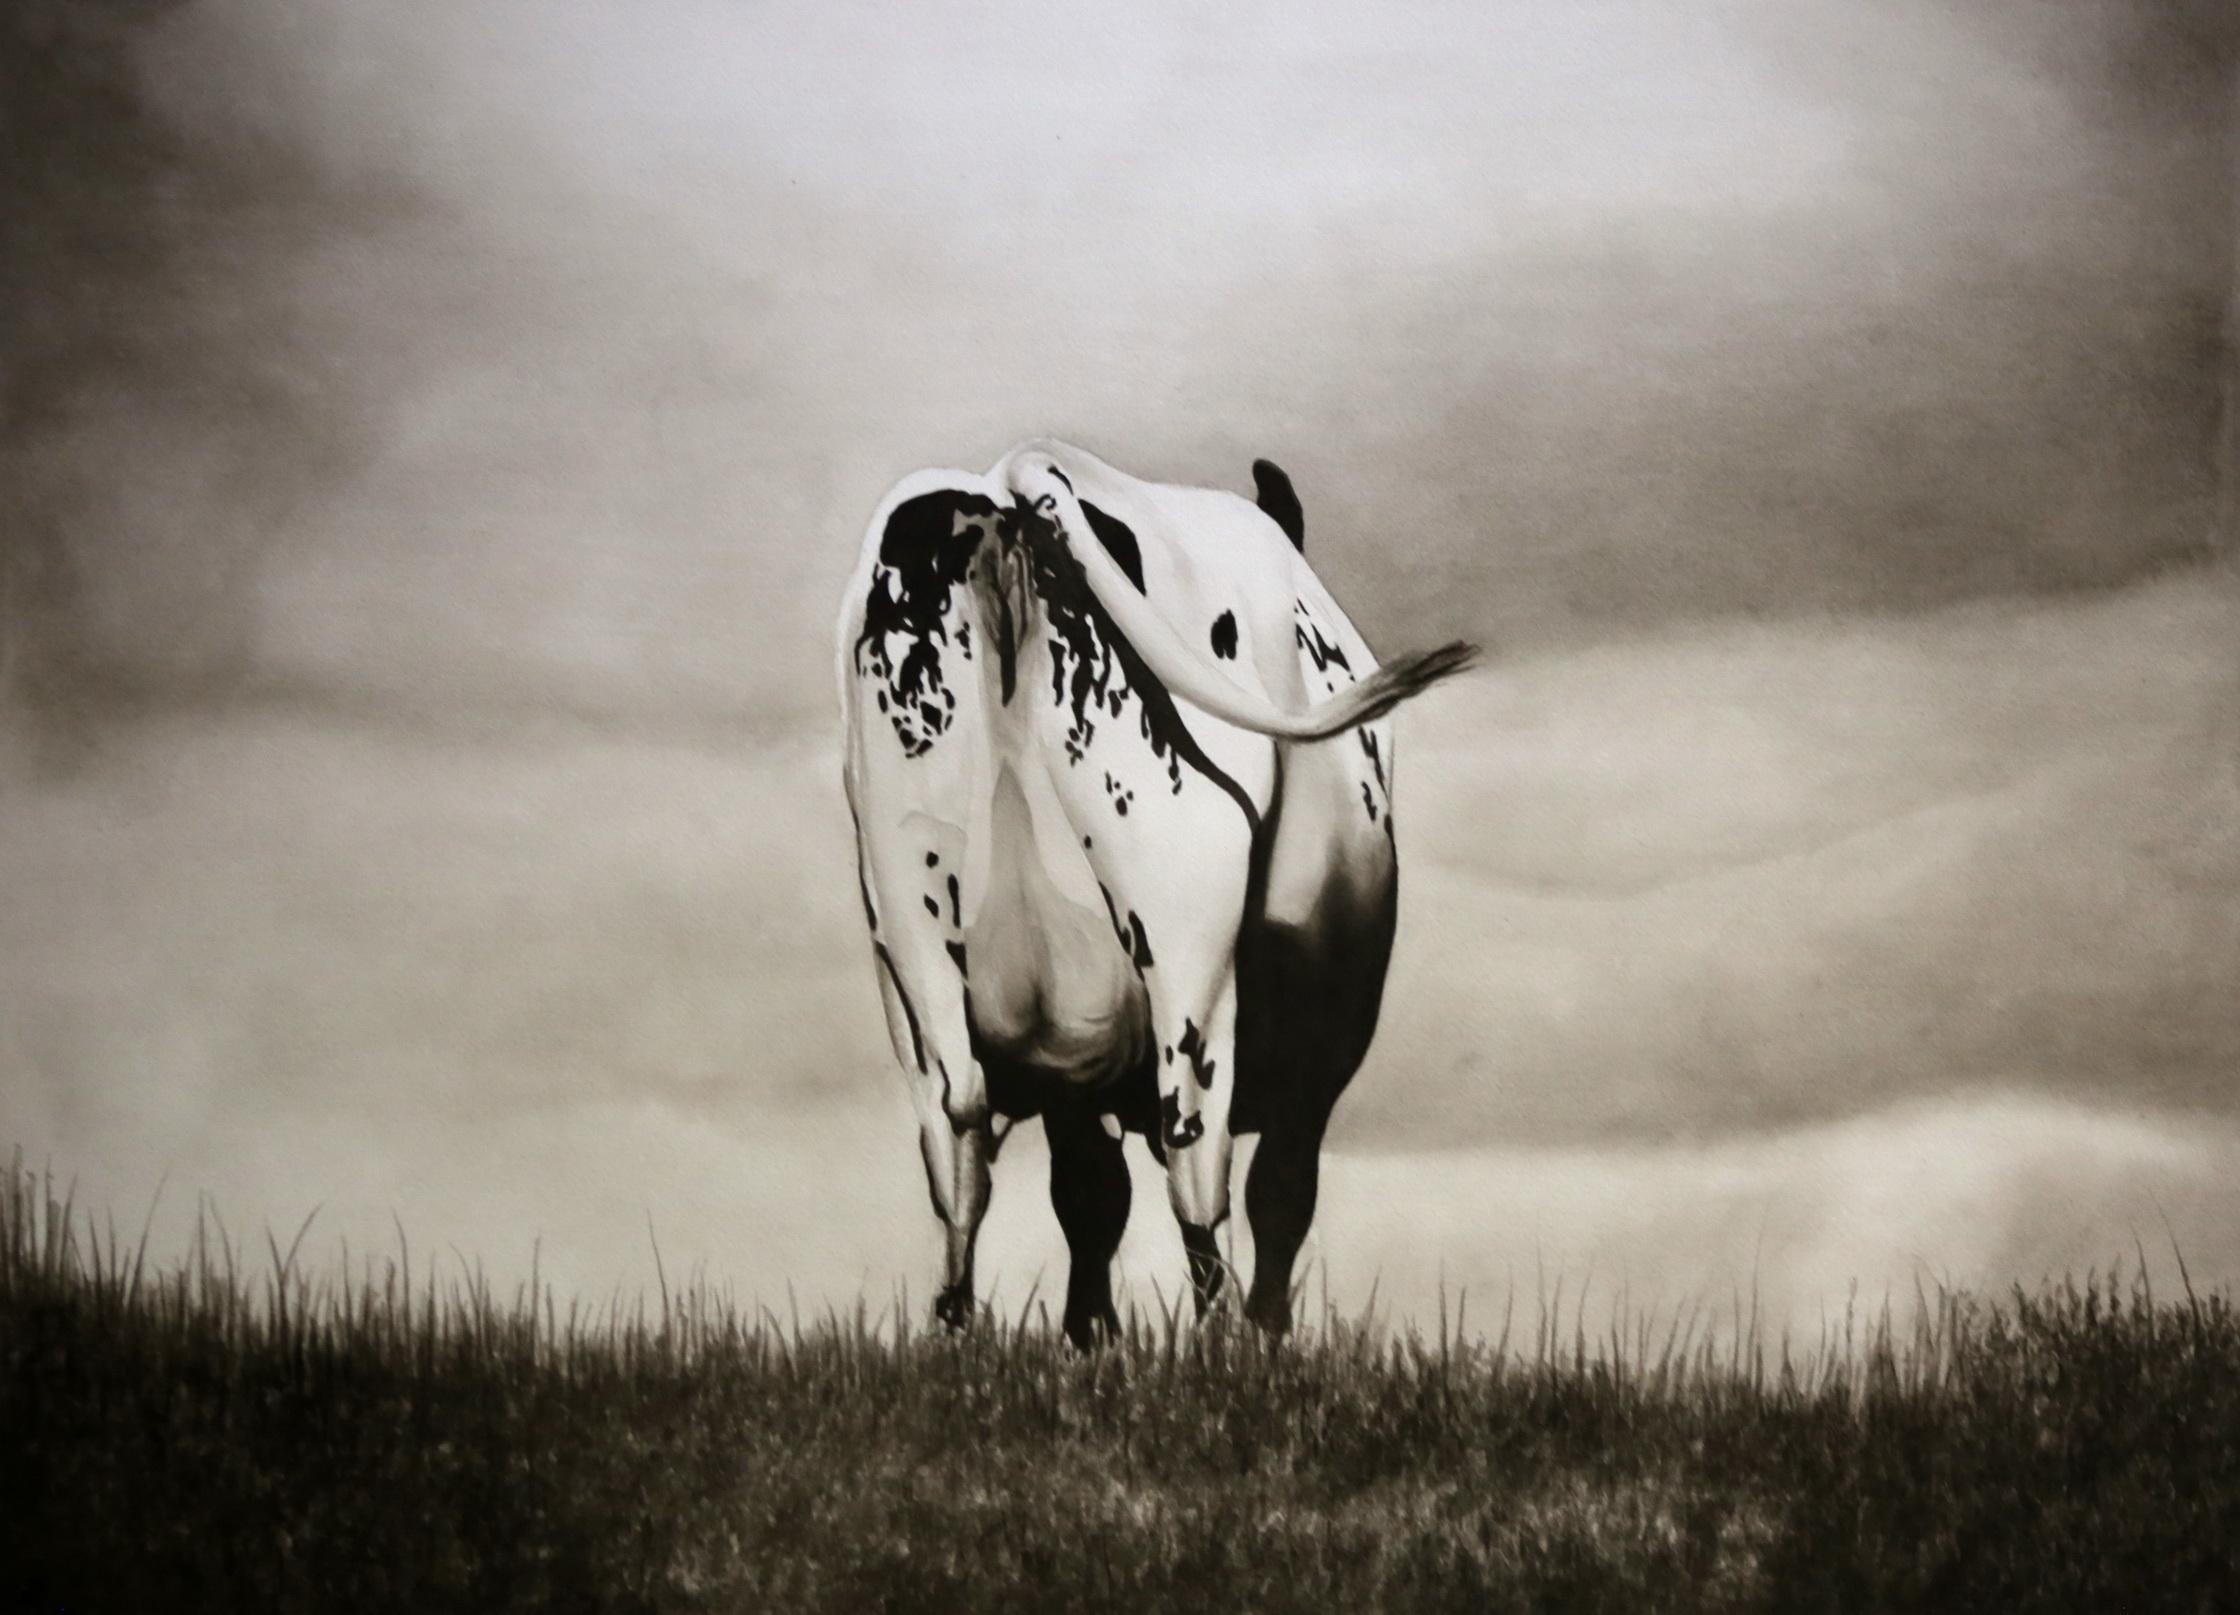 BOVIS VERECUNDO, SHY COW, watercolor on paper, 55 cm x 75 cm